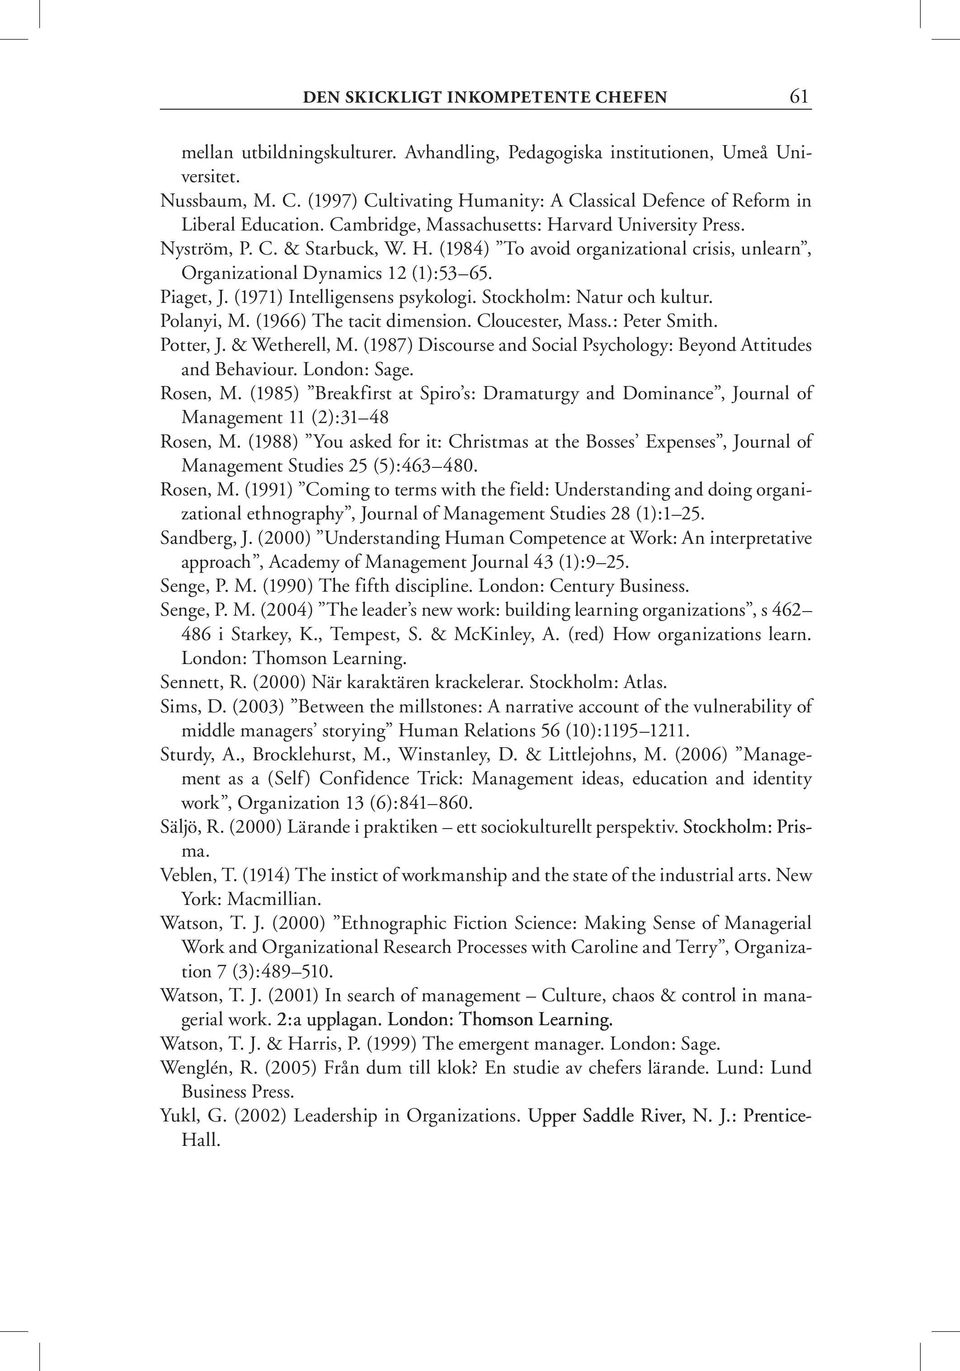 Piaget, J. (1971) Intelligensens psykologi. Stockholm: Natur och kultur. Polanyi, M. (1966) The tacit dimension. Cloucester, Mass.: Peter Smith. Potter, J. & Wetherell, M.